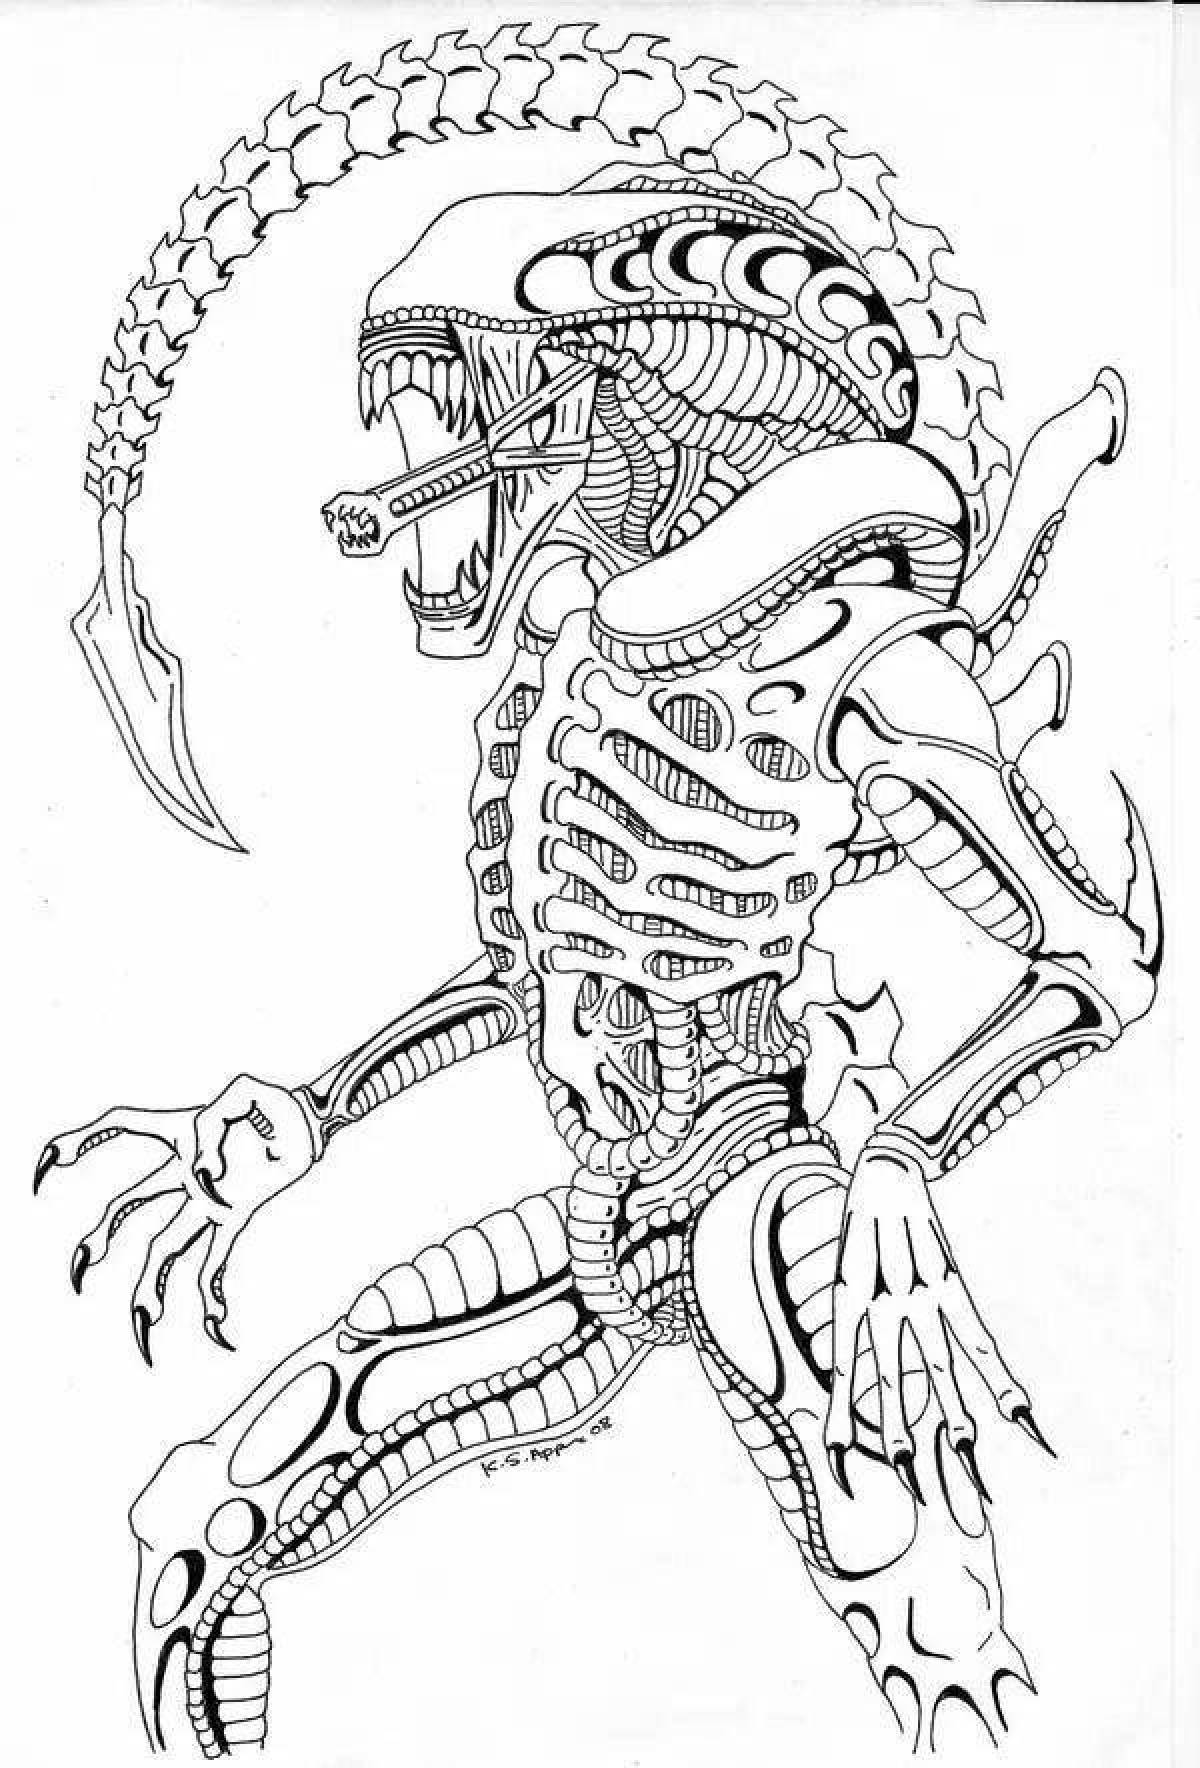 Alien vs Predator creative coloring book